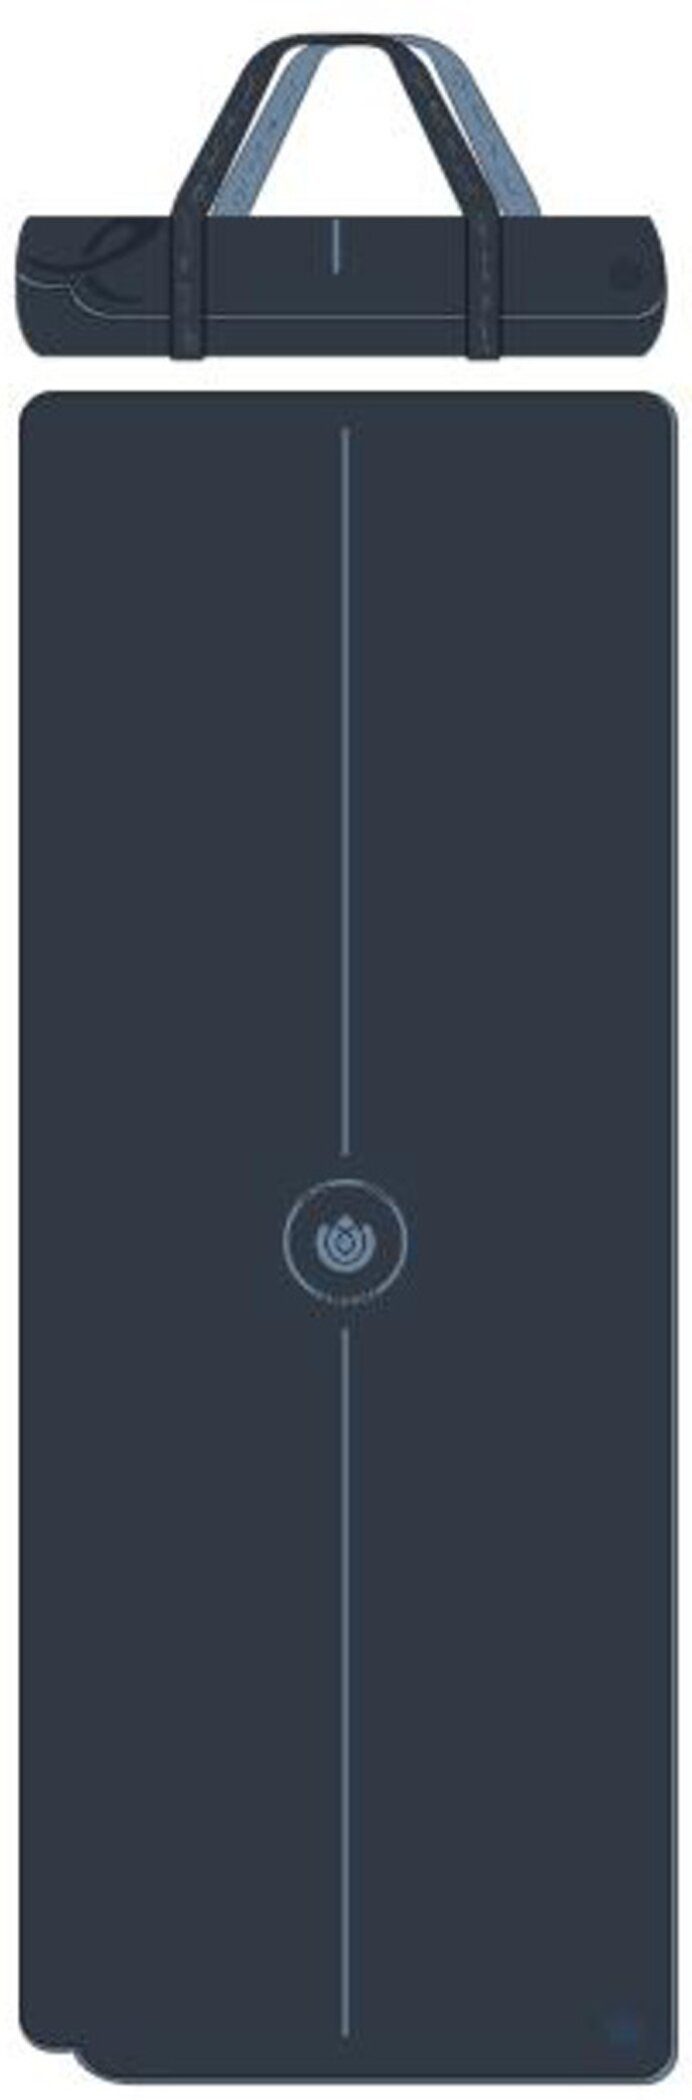 Mat Ux.-Yoga-Matte Free Energetics DARK/BLUE 1. Sportmatte NAVY Yoga PVC